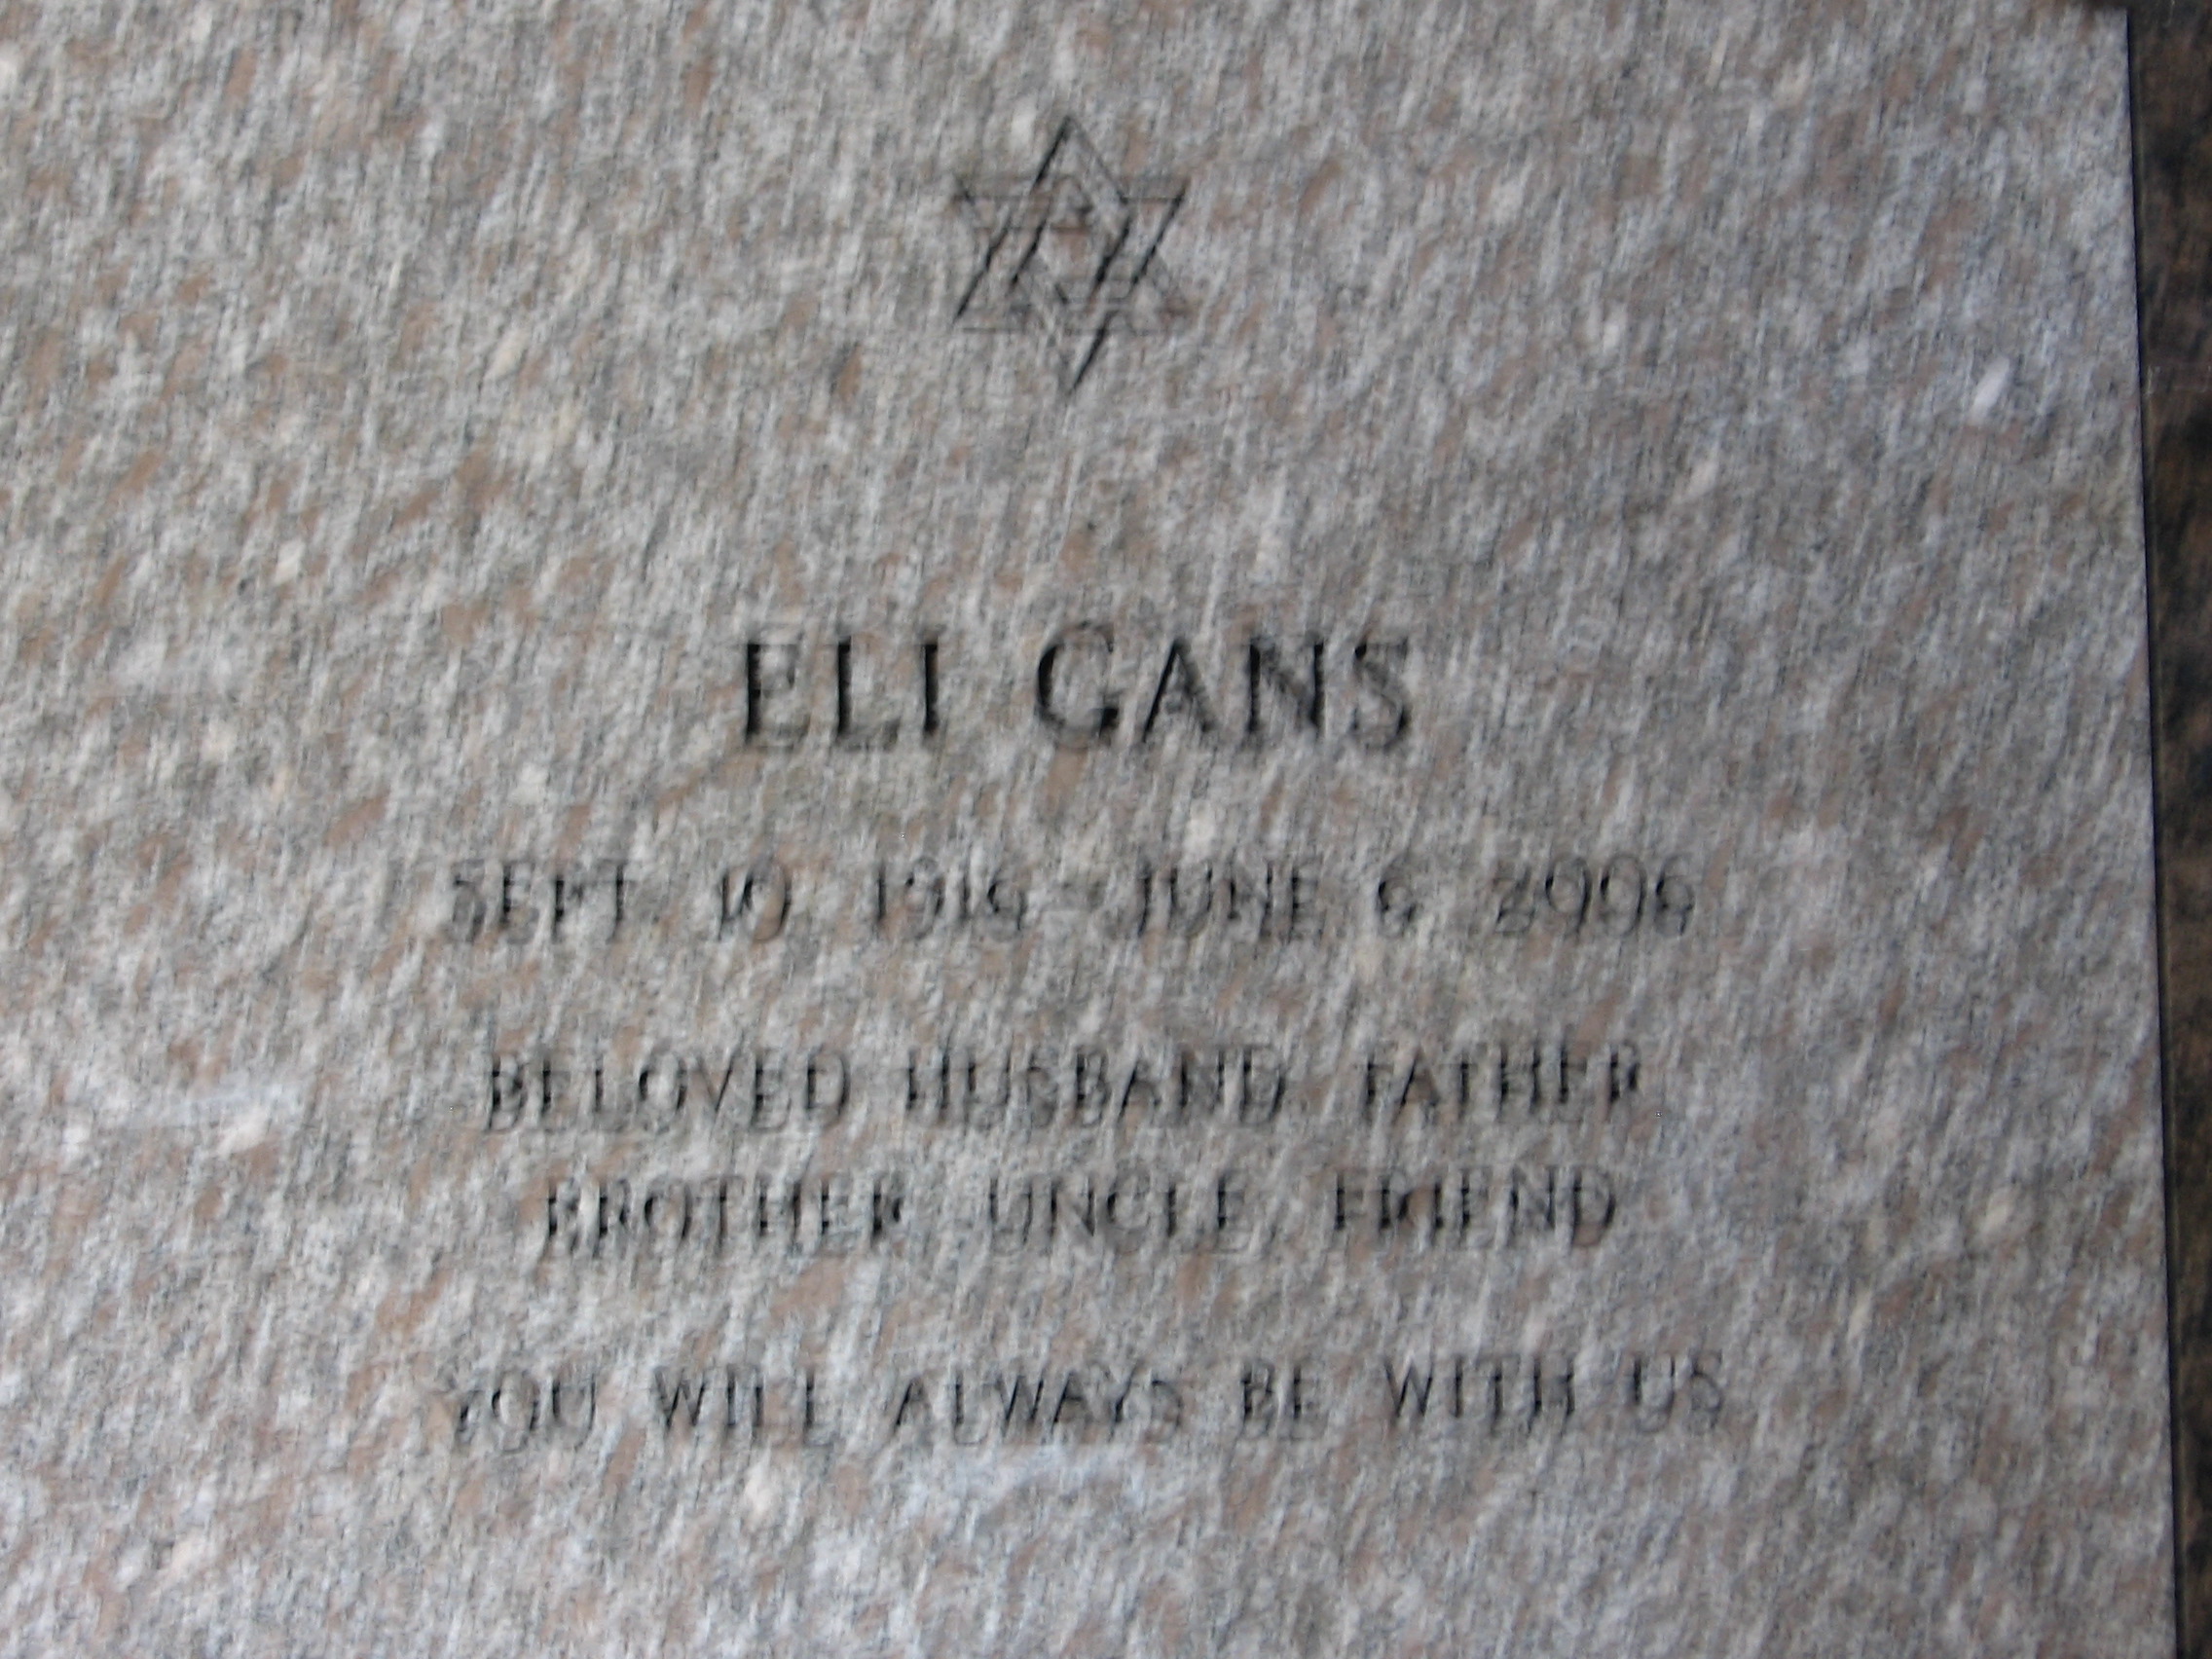 Eli Gans